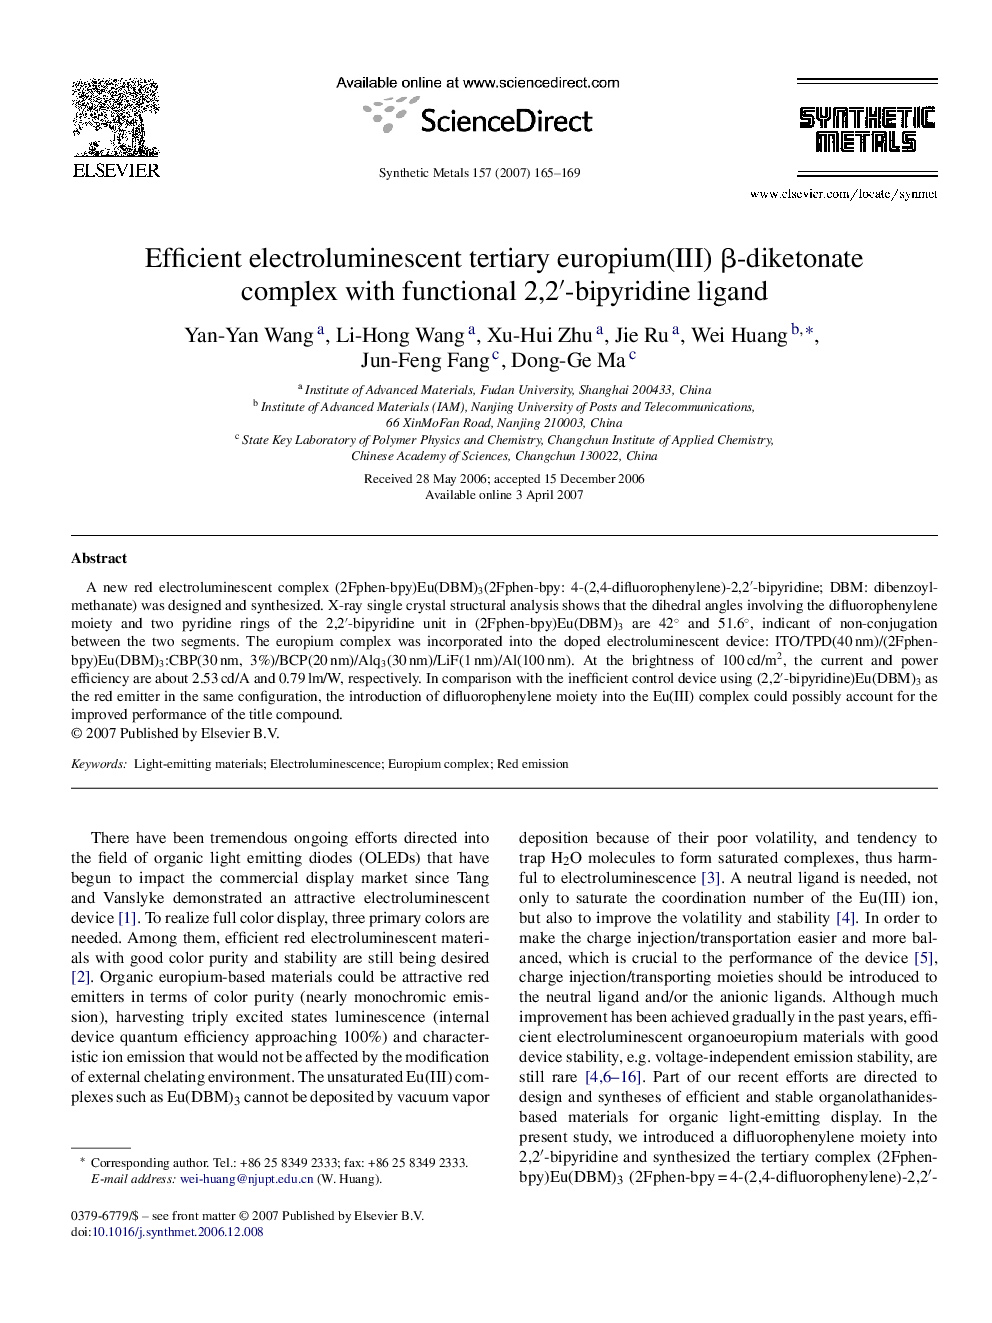 Efficient electroluminescent tertiary europium(III) Î²-diketonate complex with functional 2,2â²-bipyridine ligand